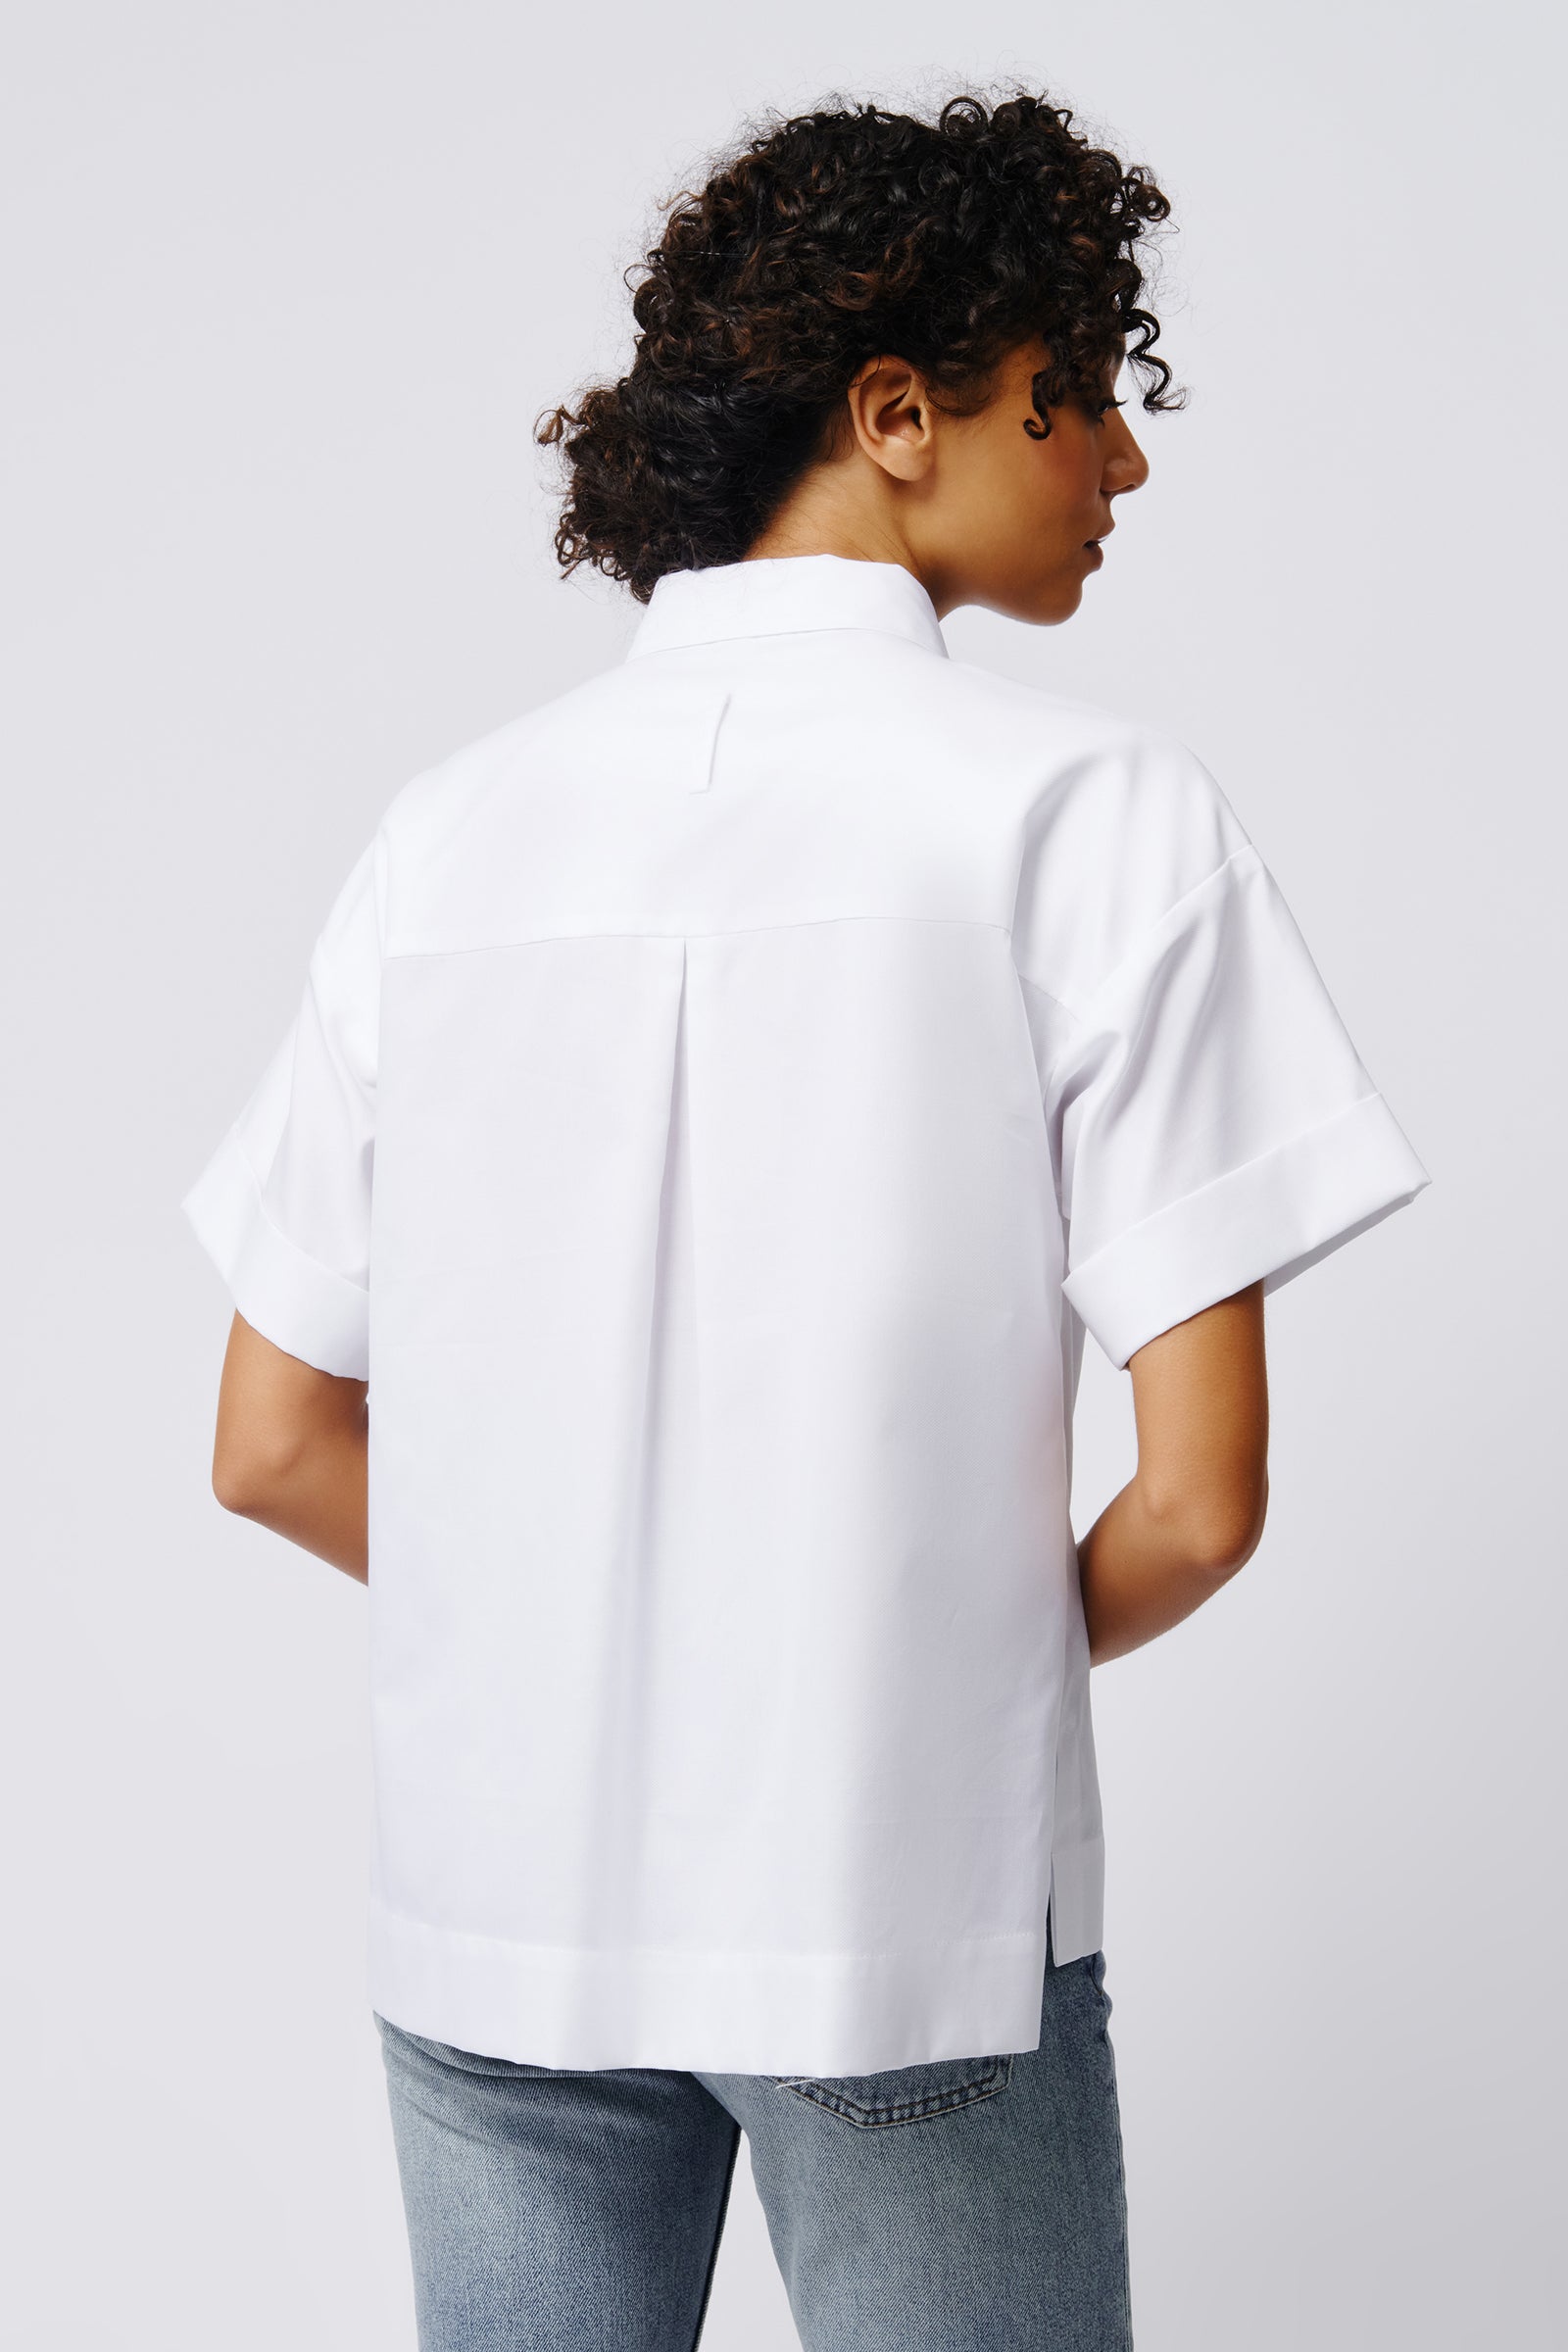 Kal Rieman Billie Cuffed Short Sleeve Shirt in White on Model Back View Crop